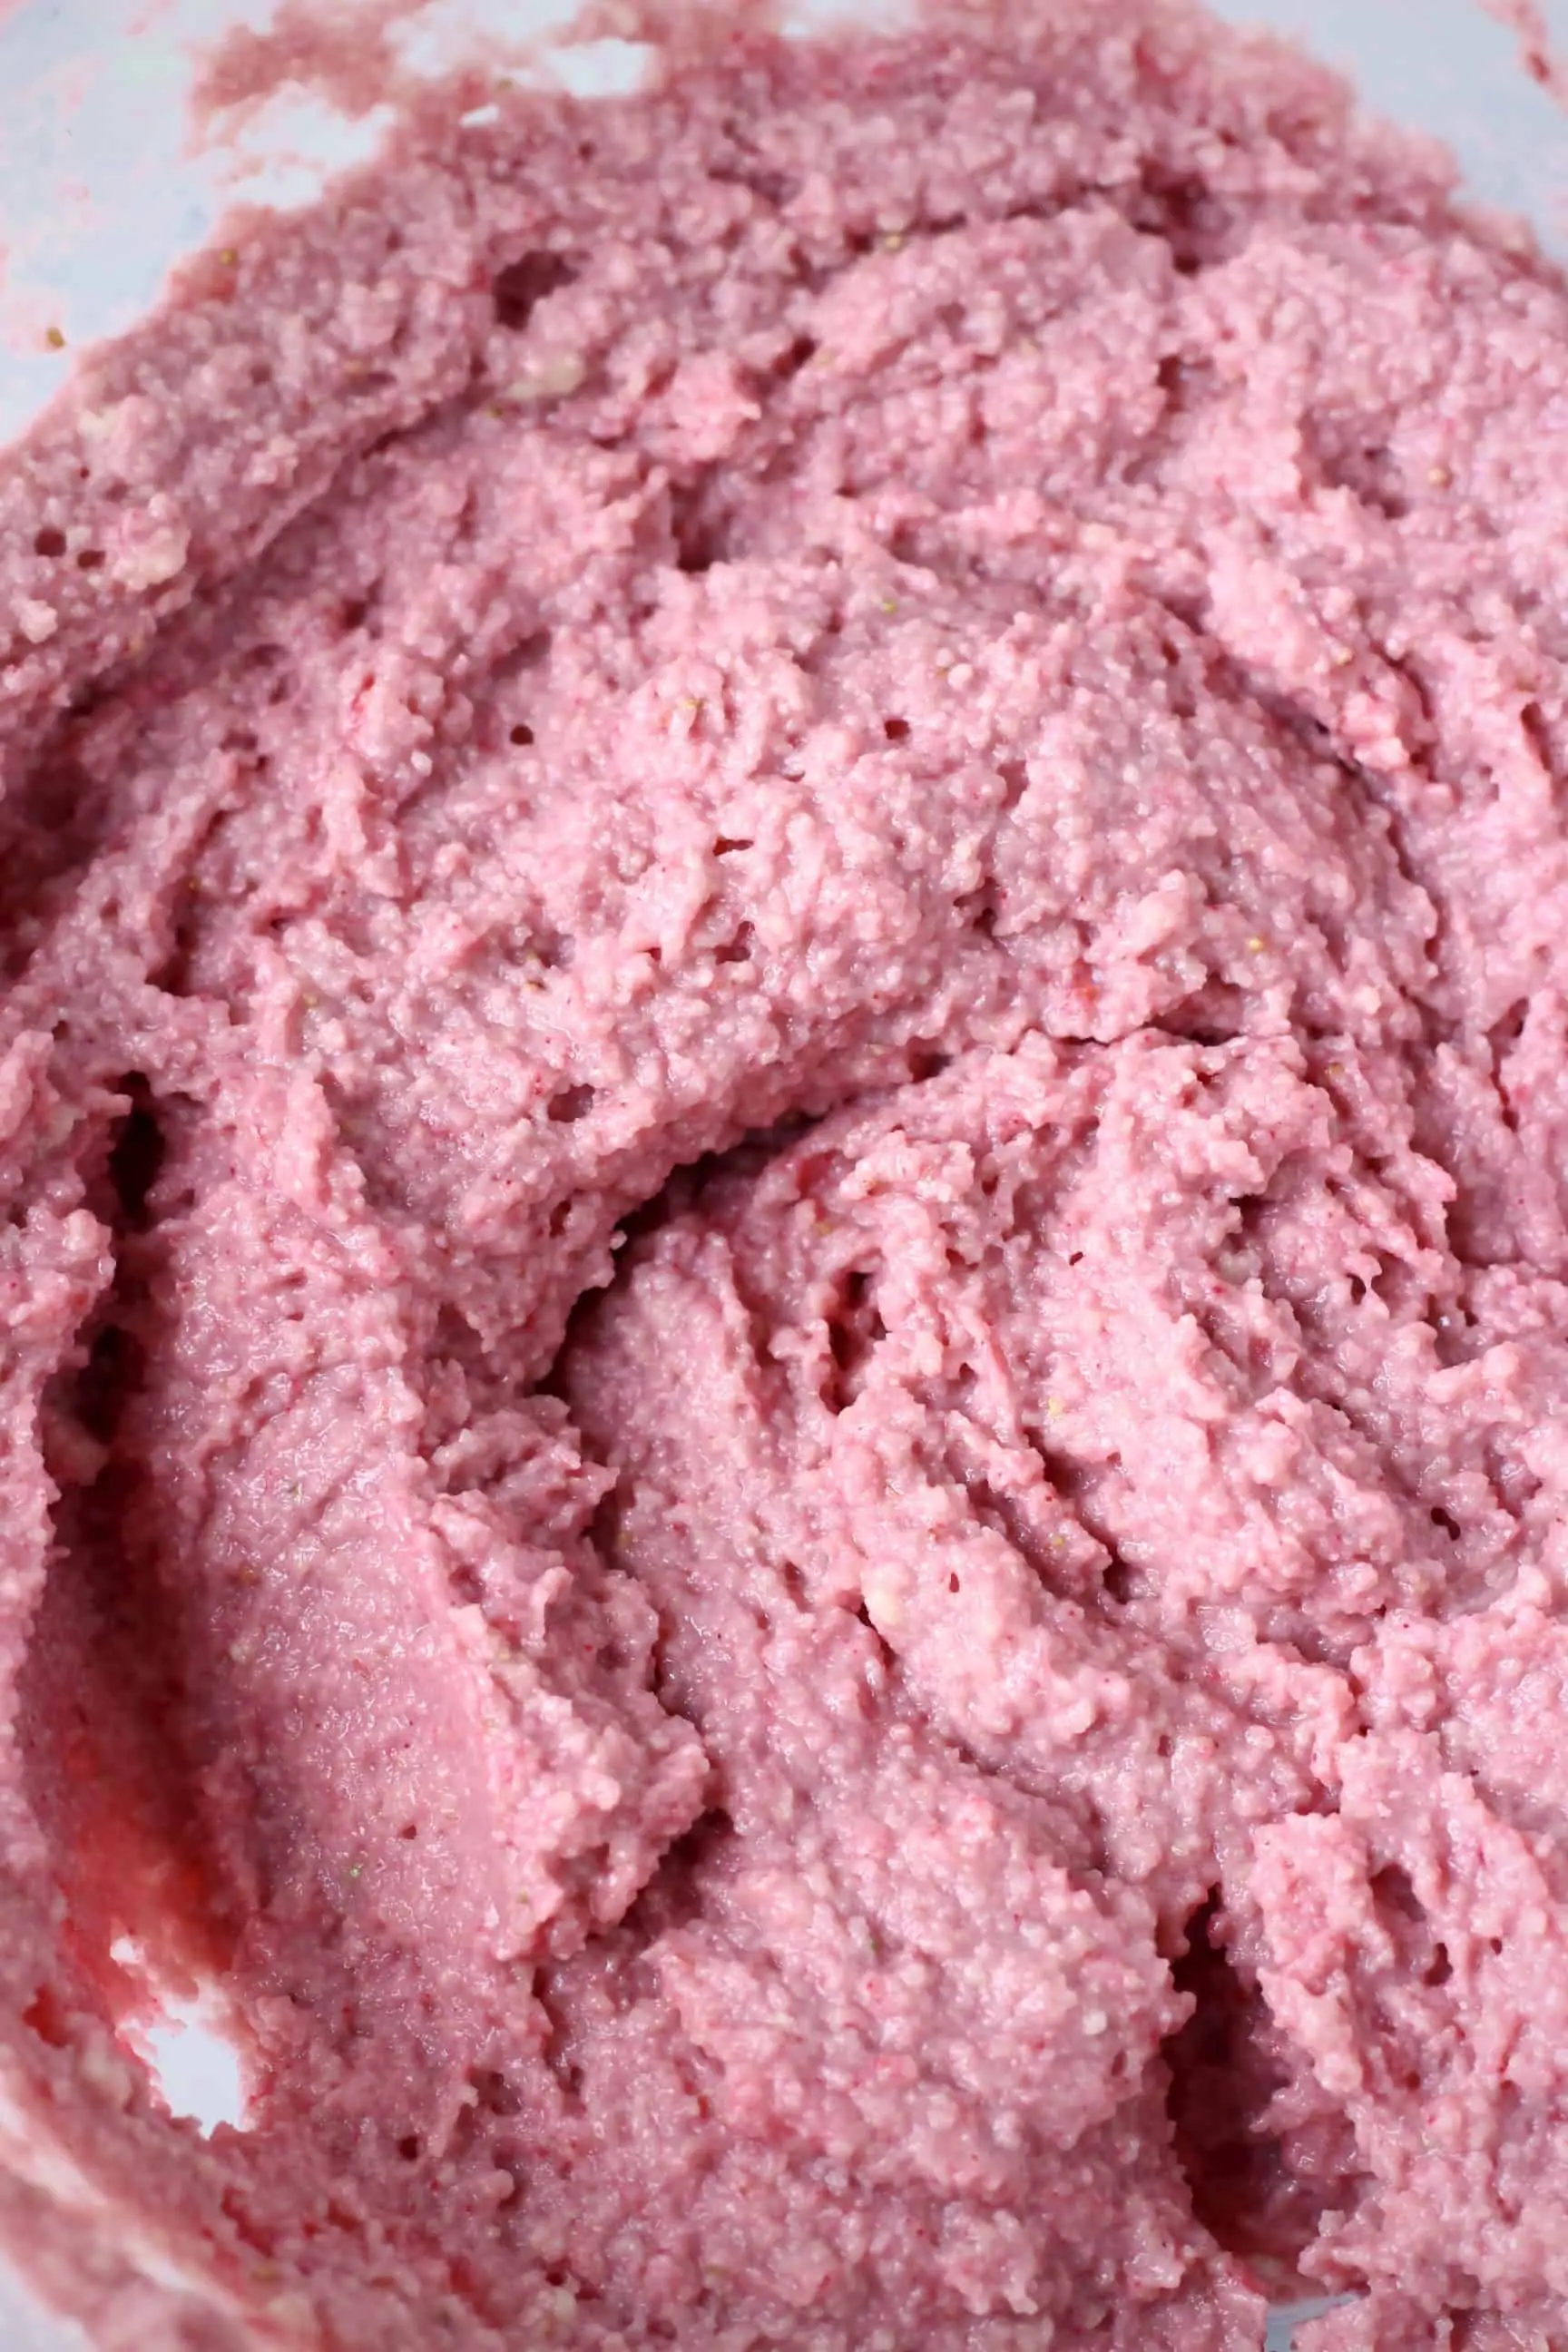 Raw pink gluten-free vegan strawberry cake batter in a bowl